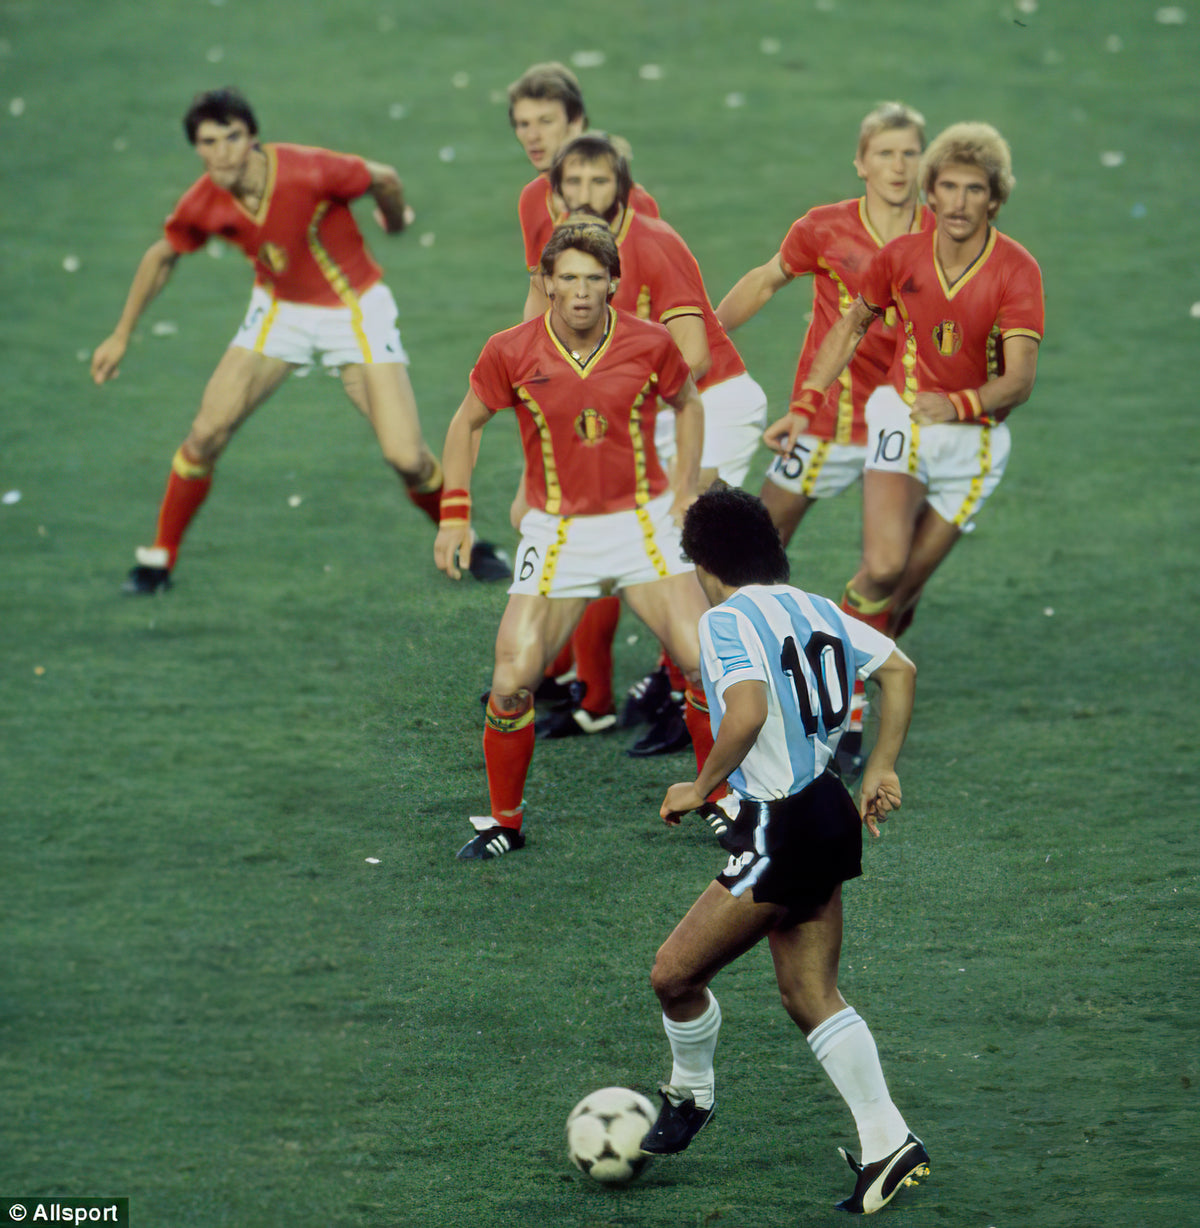 Diego Maradona taking on six Belgium players